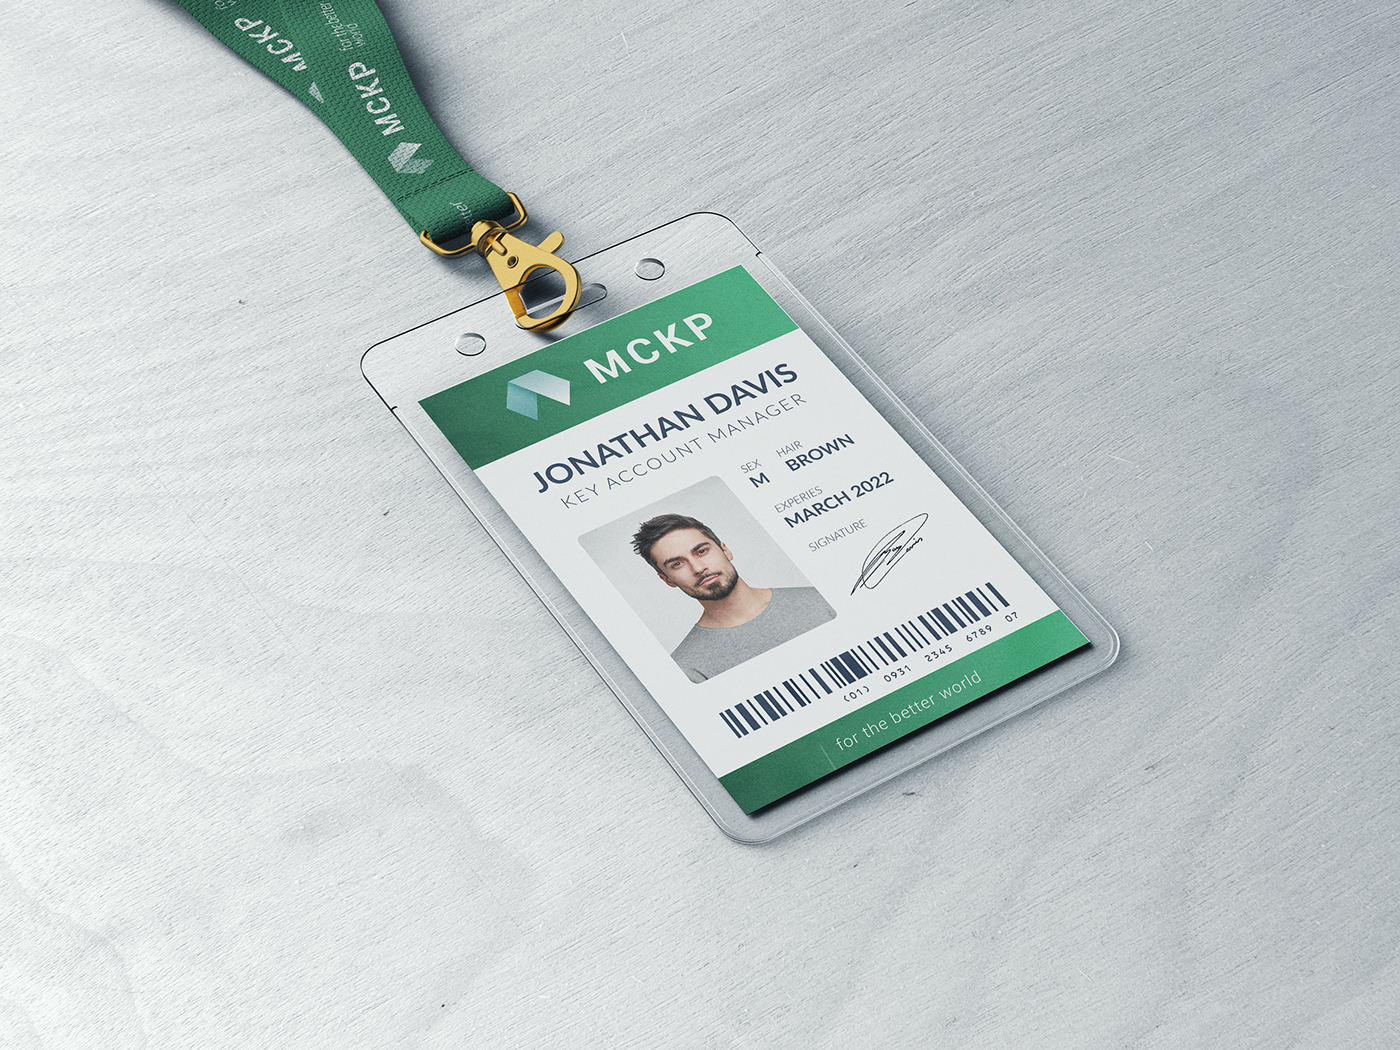 Lanyard badge Mockup psd freebie free idcard card holder neck